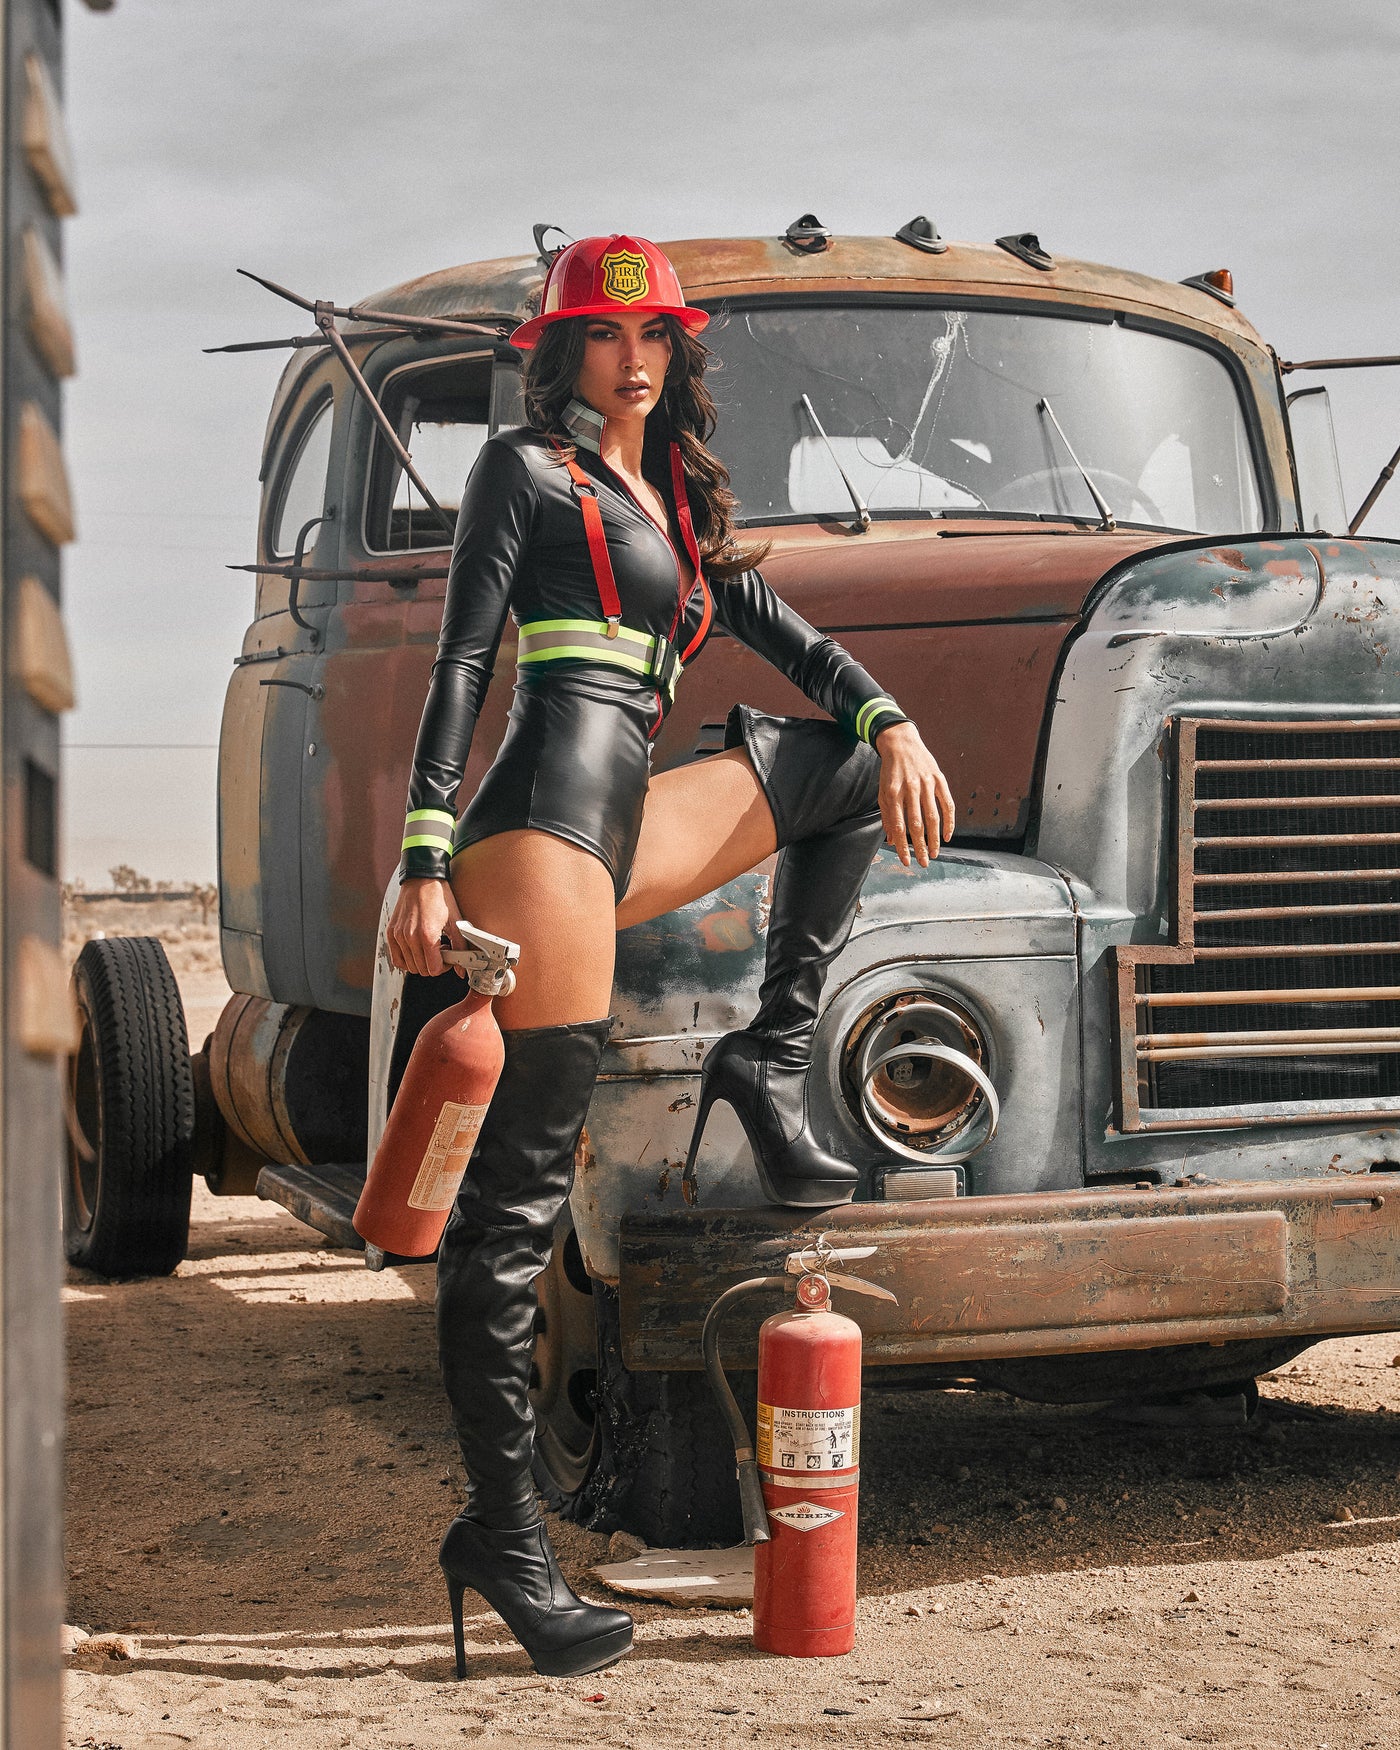 3pc. Too Hot Firefighter Women's Halloween Costume - For Love of Lingerie